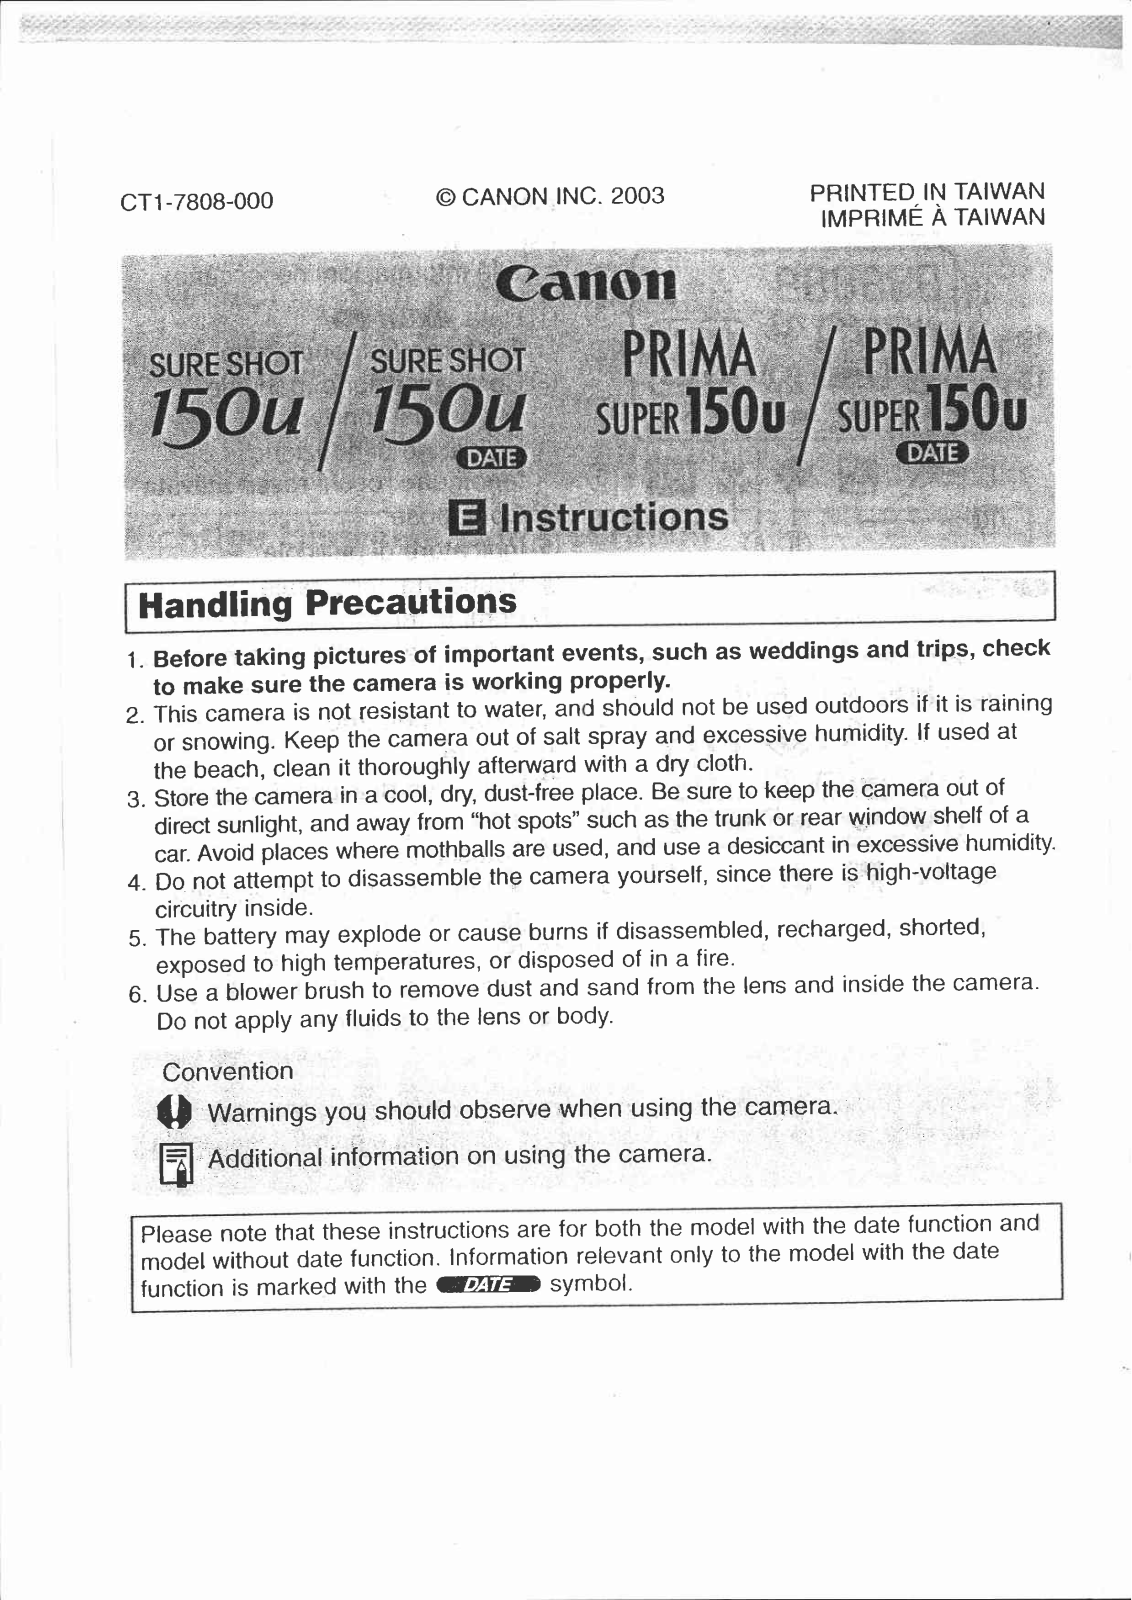 Canon 150U Date User Manual